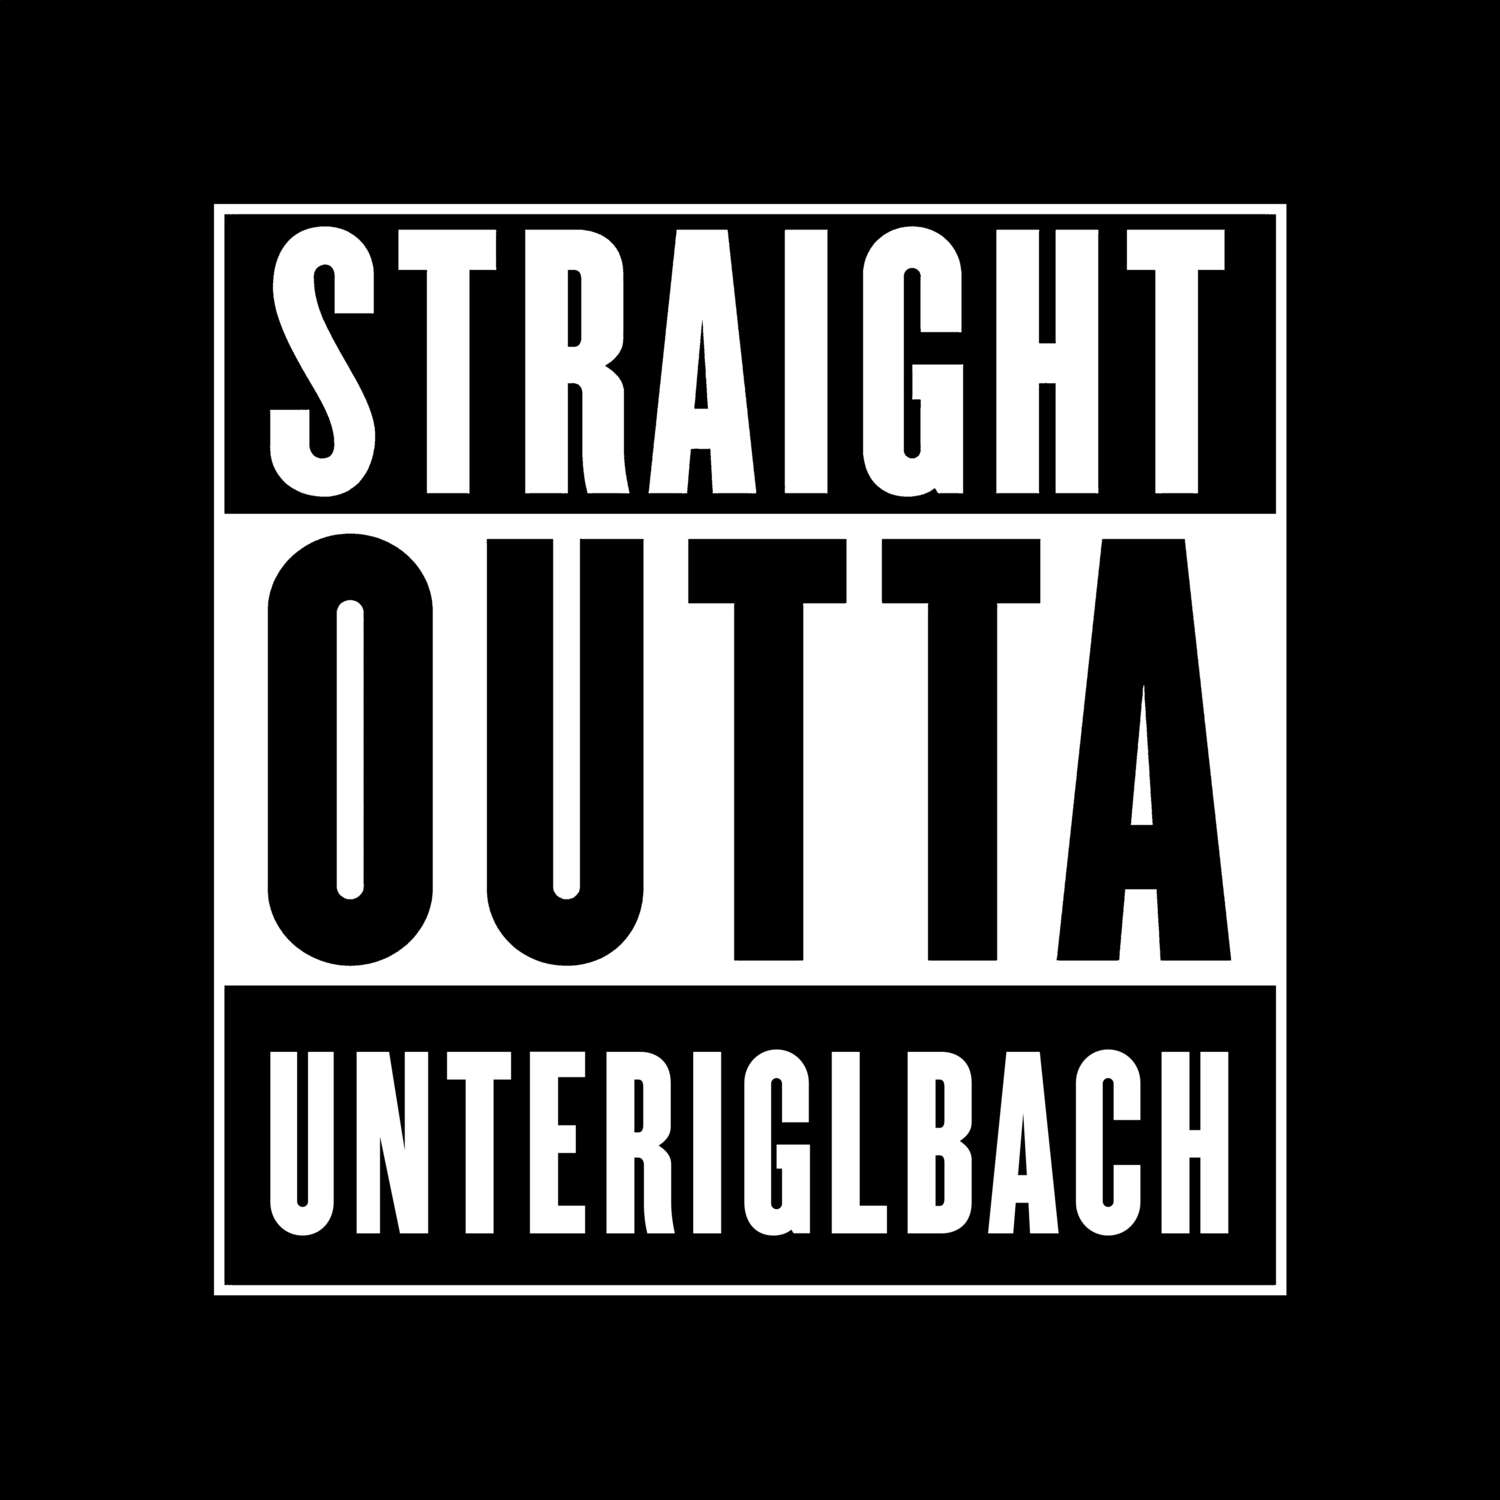 Unteriglbach T-Shirt »Straight Outta«